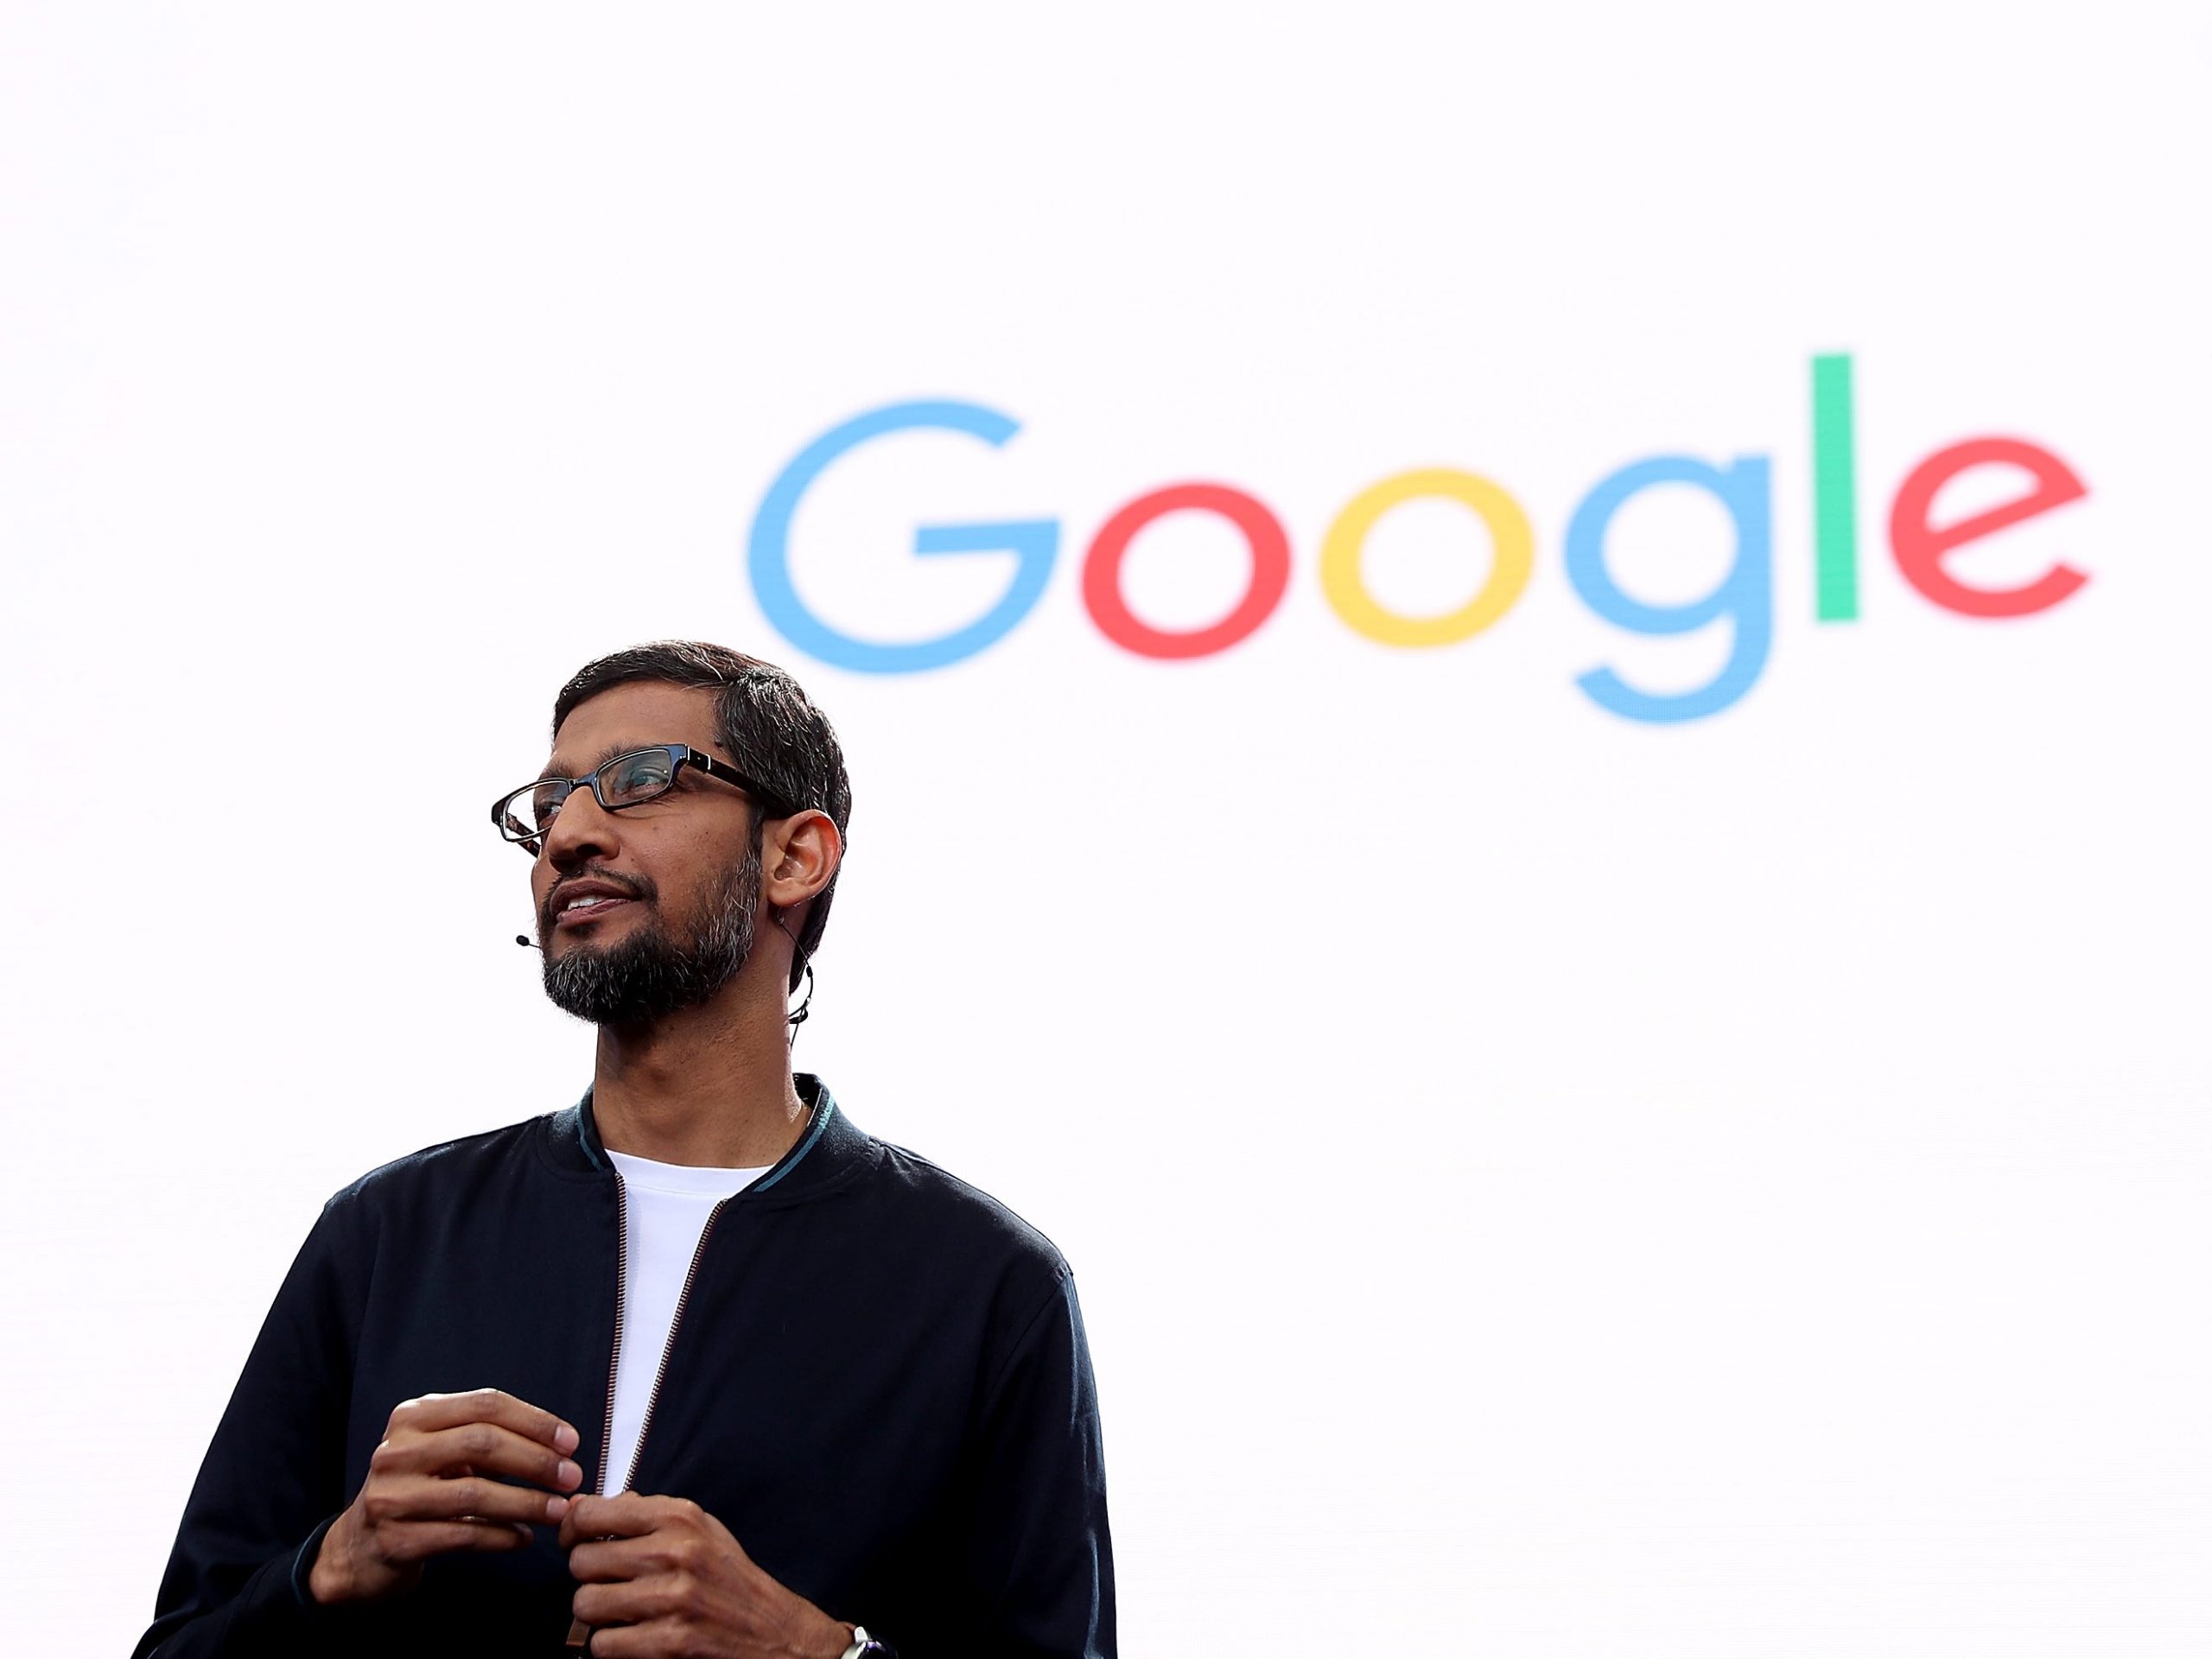 Google's CEO Sundar Pichai